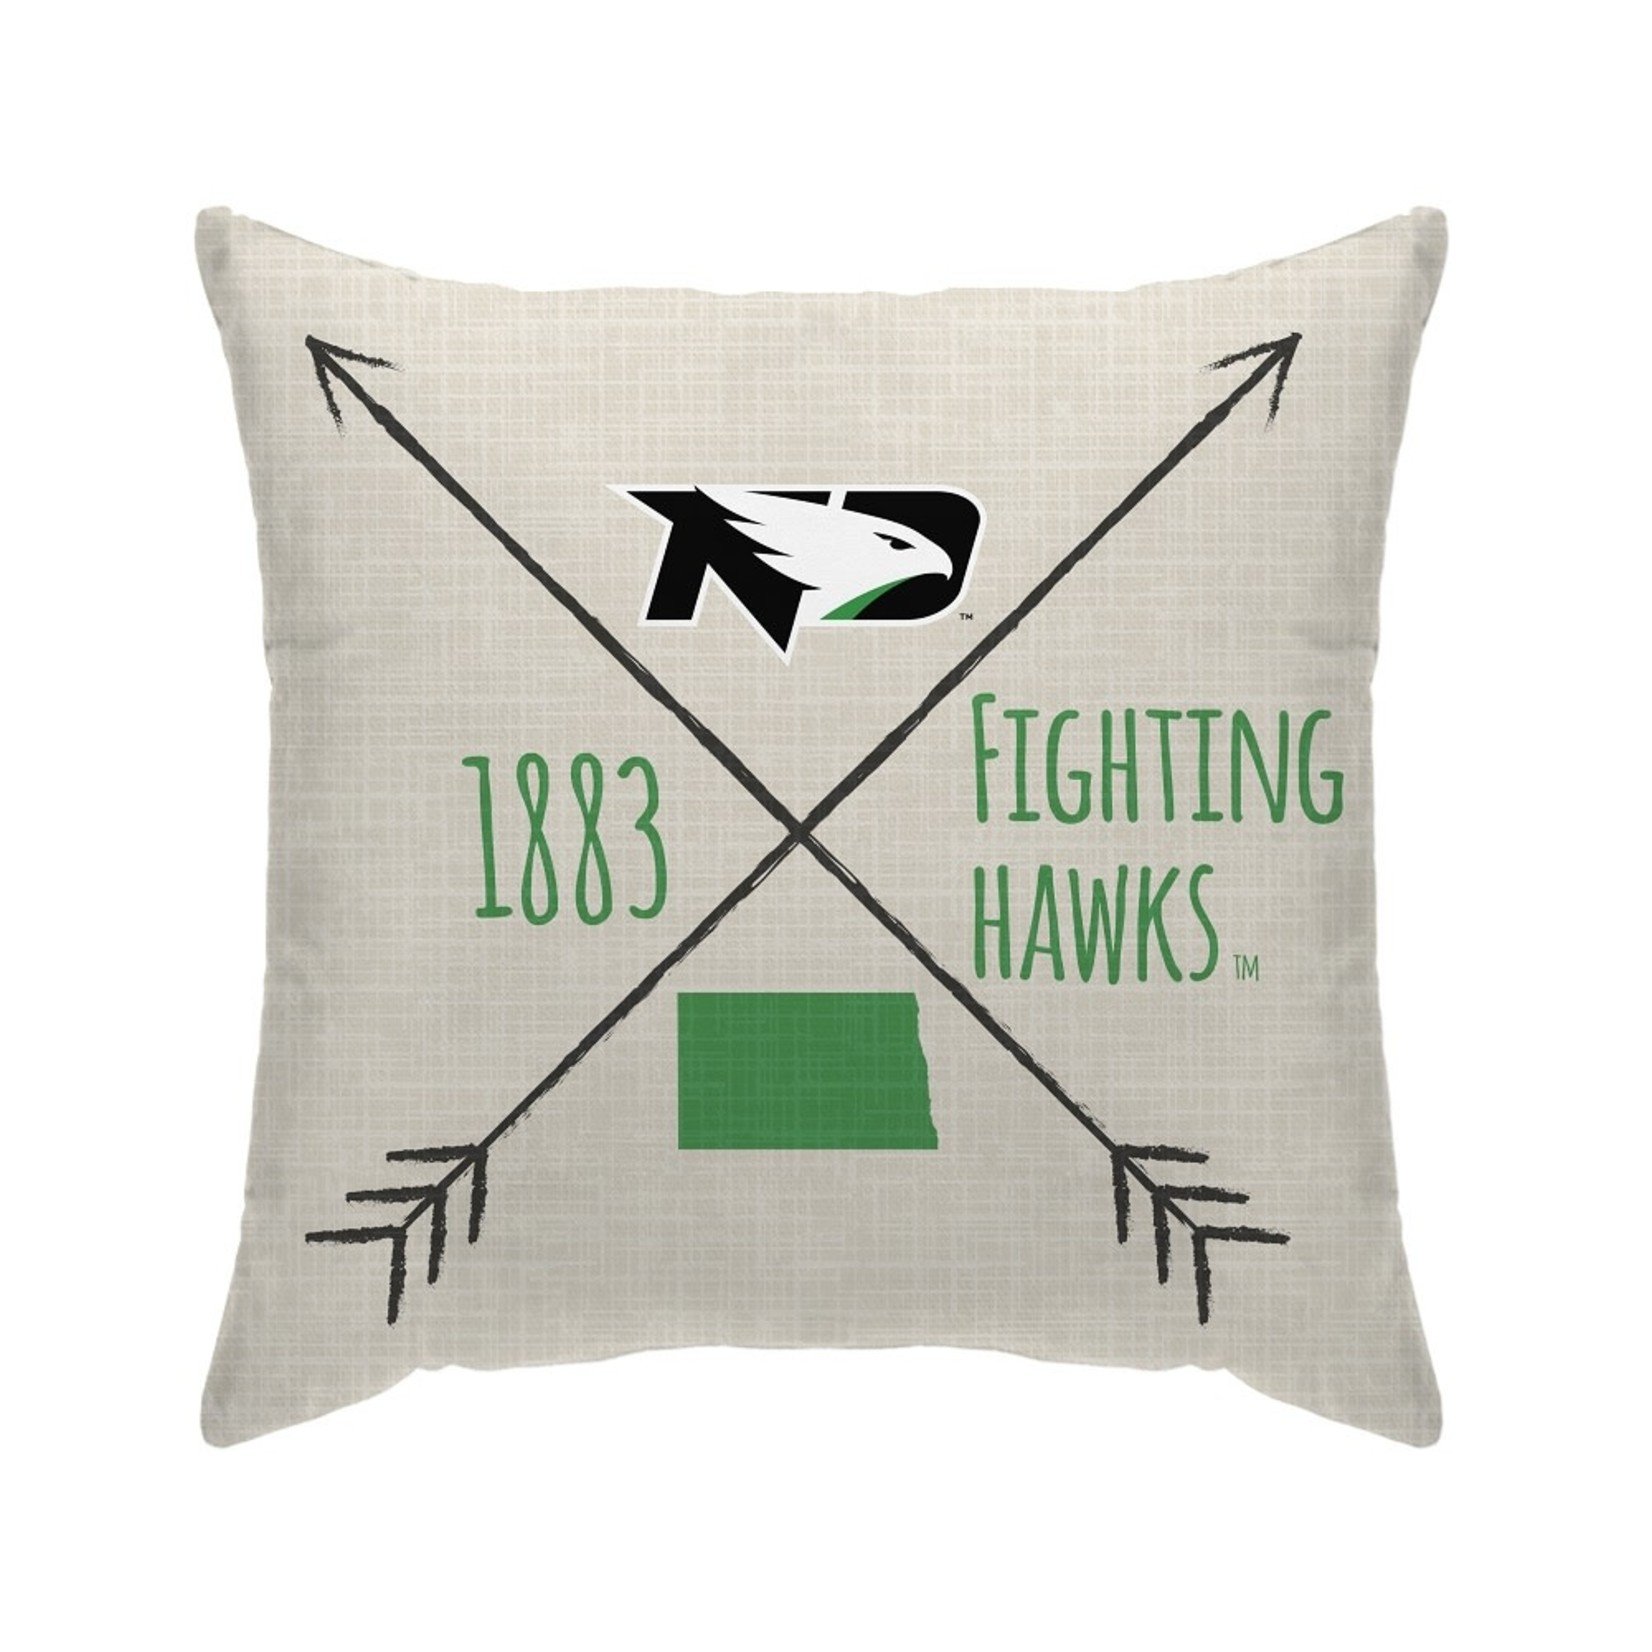 Fighting Hawks Crossed Arrows Throw Pillow